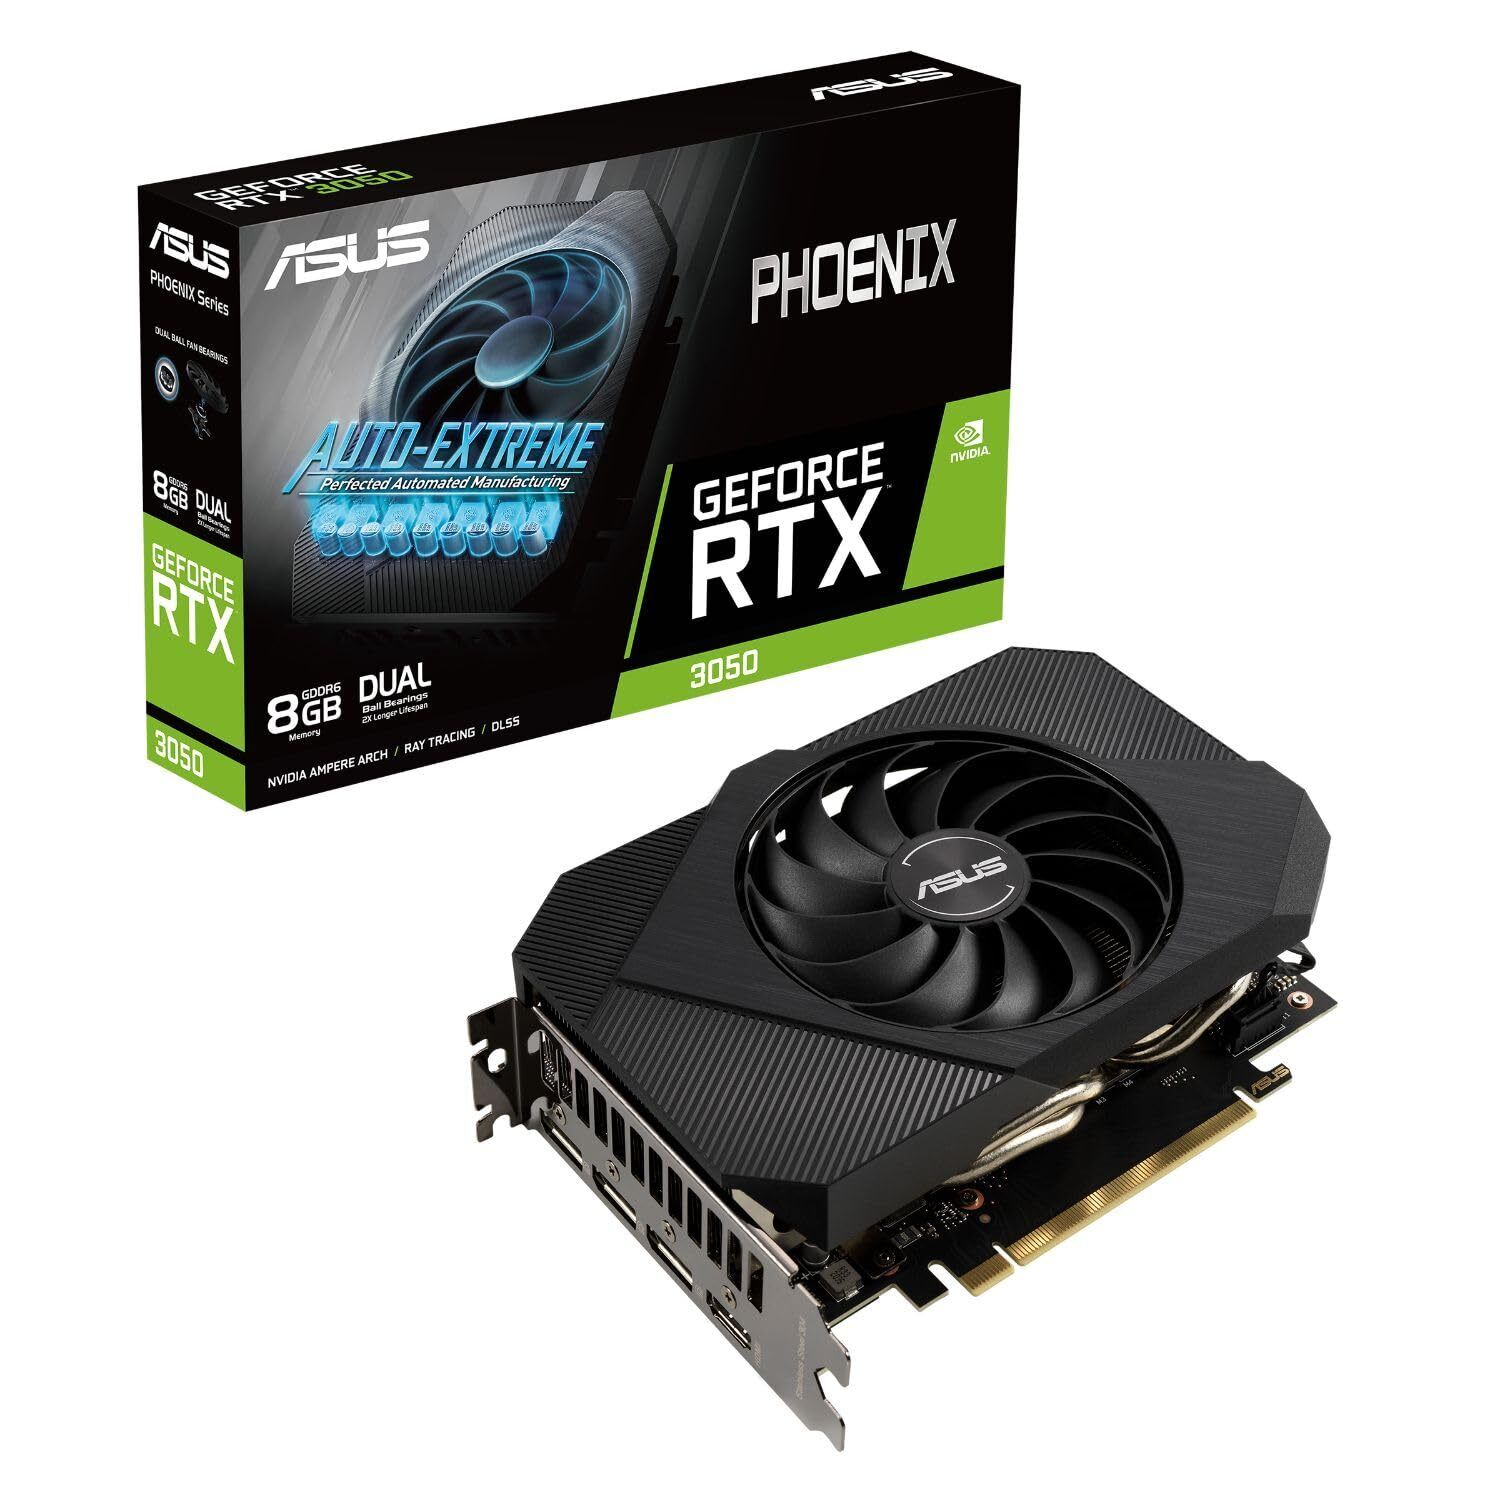 ASUS Phoenix NVIDIA GeForce RTX 3050 Gaming Graphics Card - PCIe 4.0, 8GB GDDR